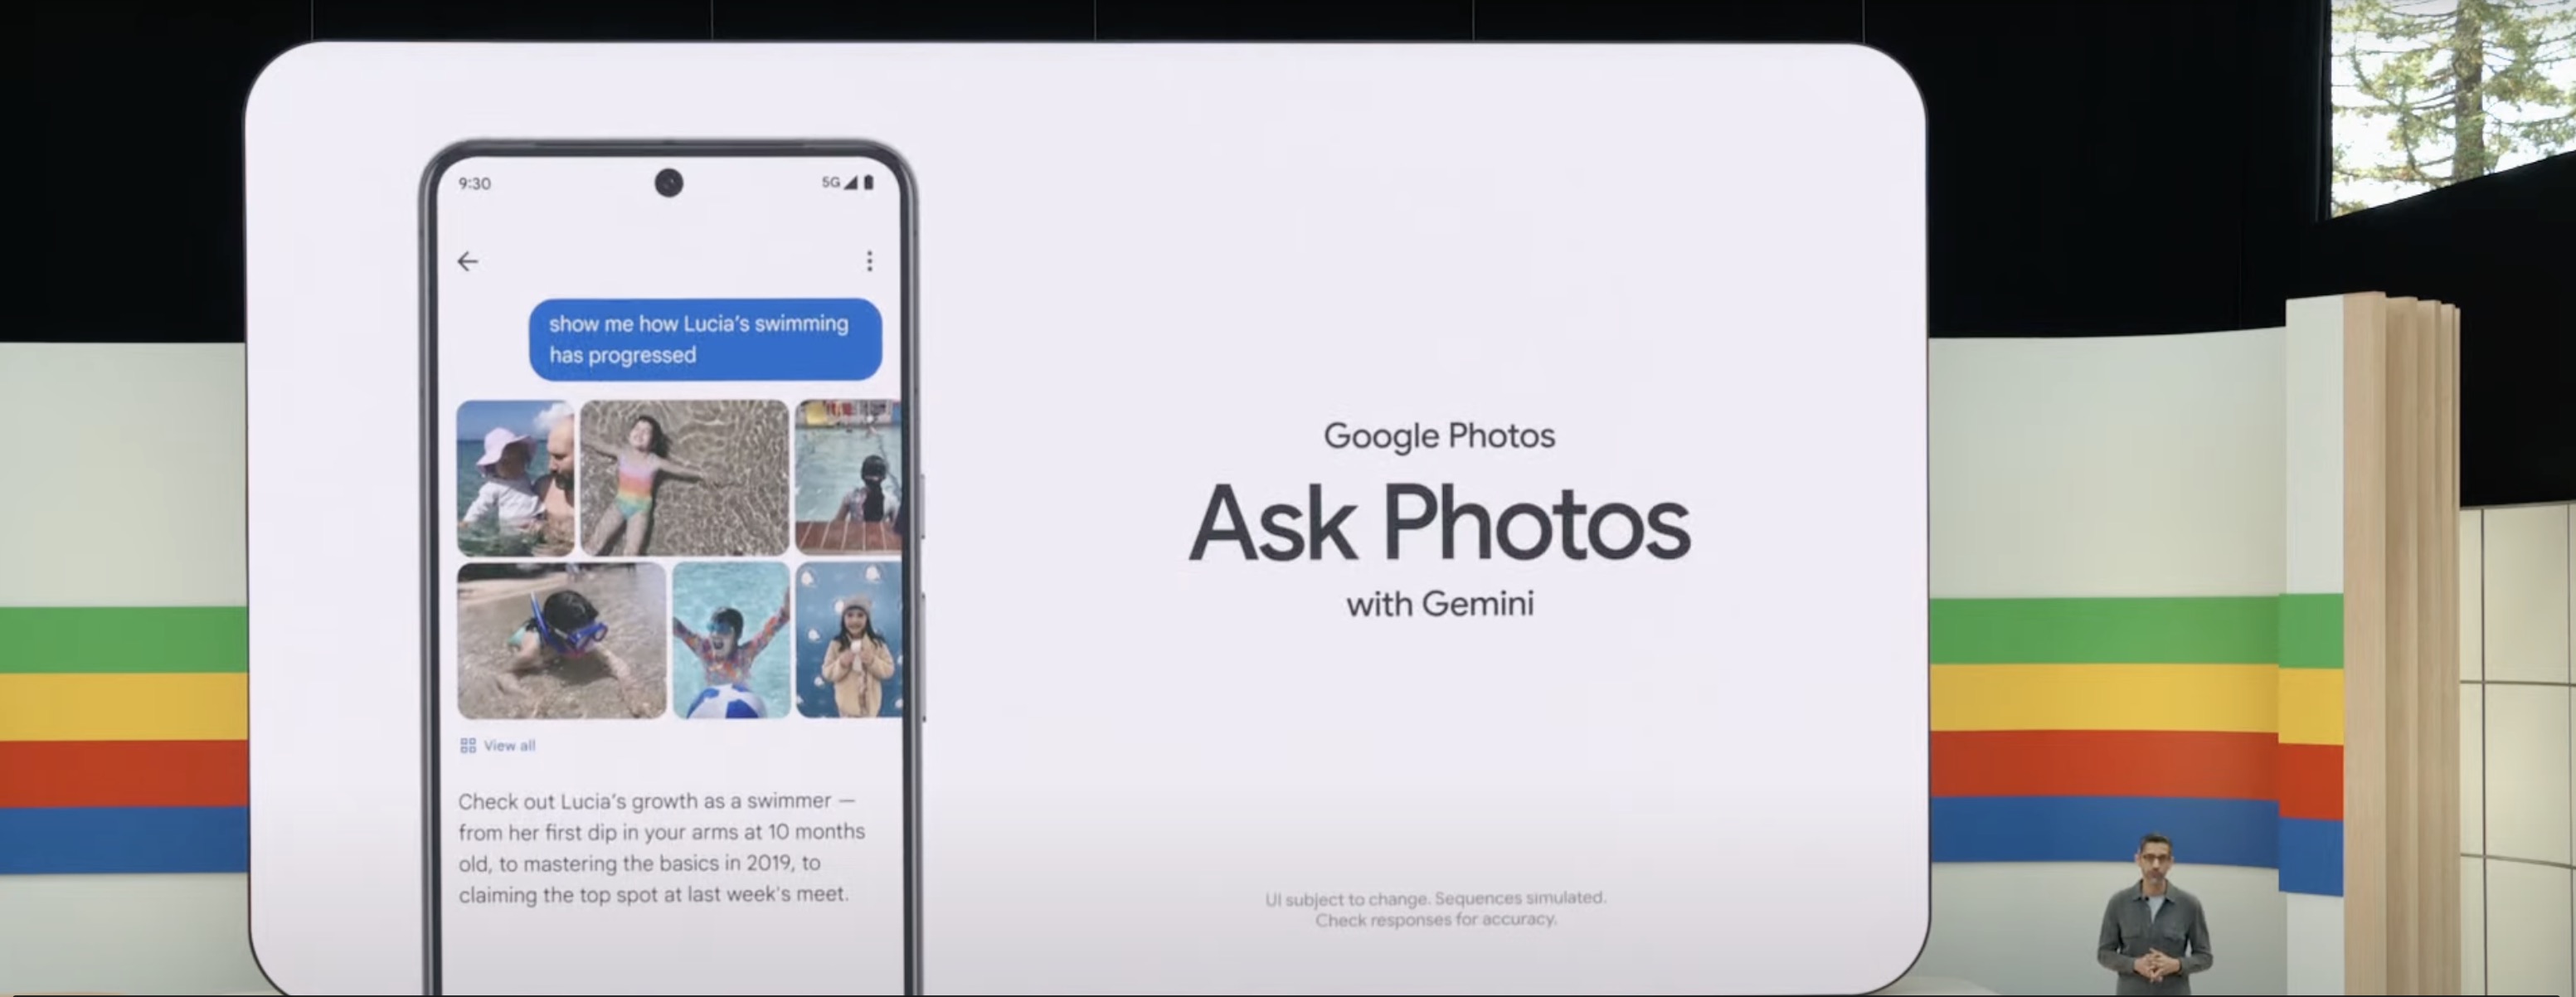 Google's Ask Photos debut.